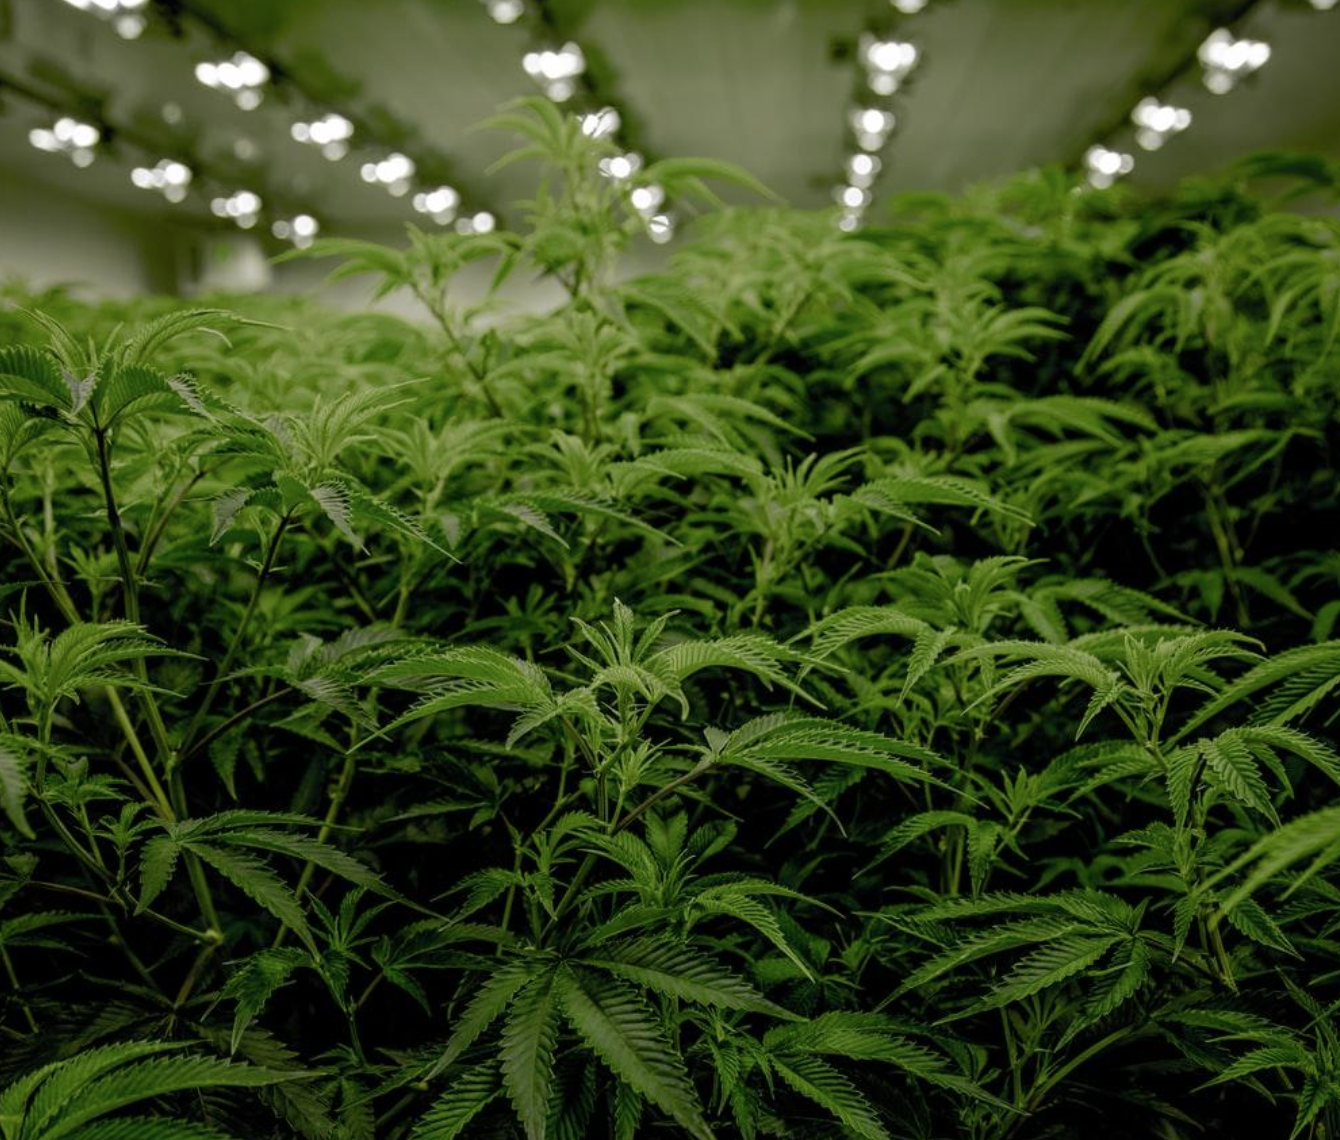 Next Green Wave Cannabis plants in California; image by Ryan Lange, via Unsplash.com.